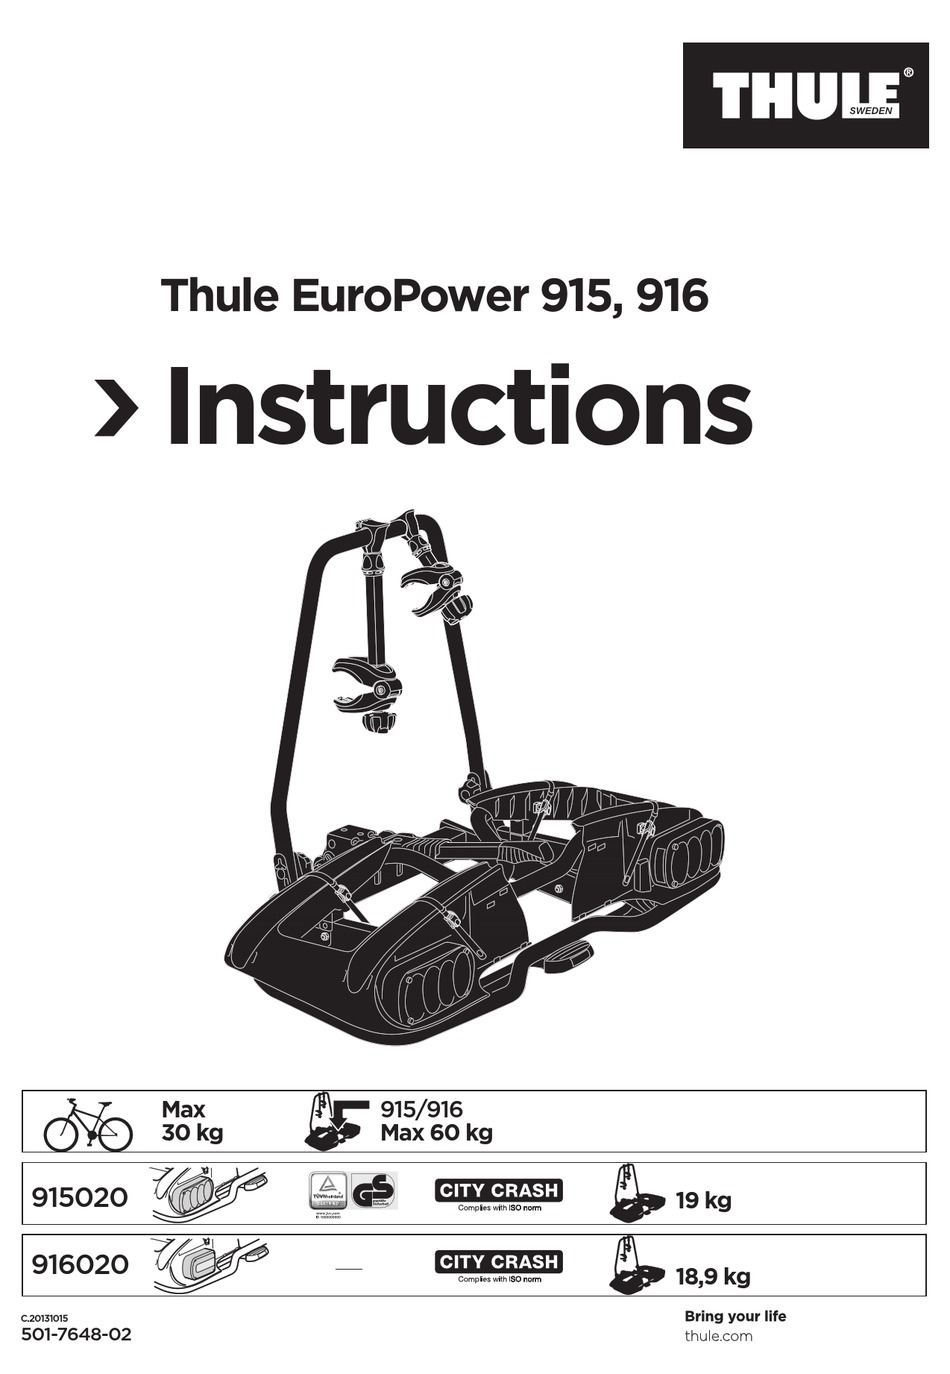 moeilijk verhouding Nachtvlek THULE EUROPOWER 915 INSTRUCTIONS MANUAL Pdf Download | ManualsLib